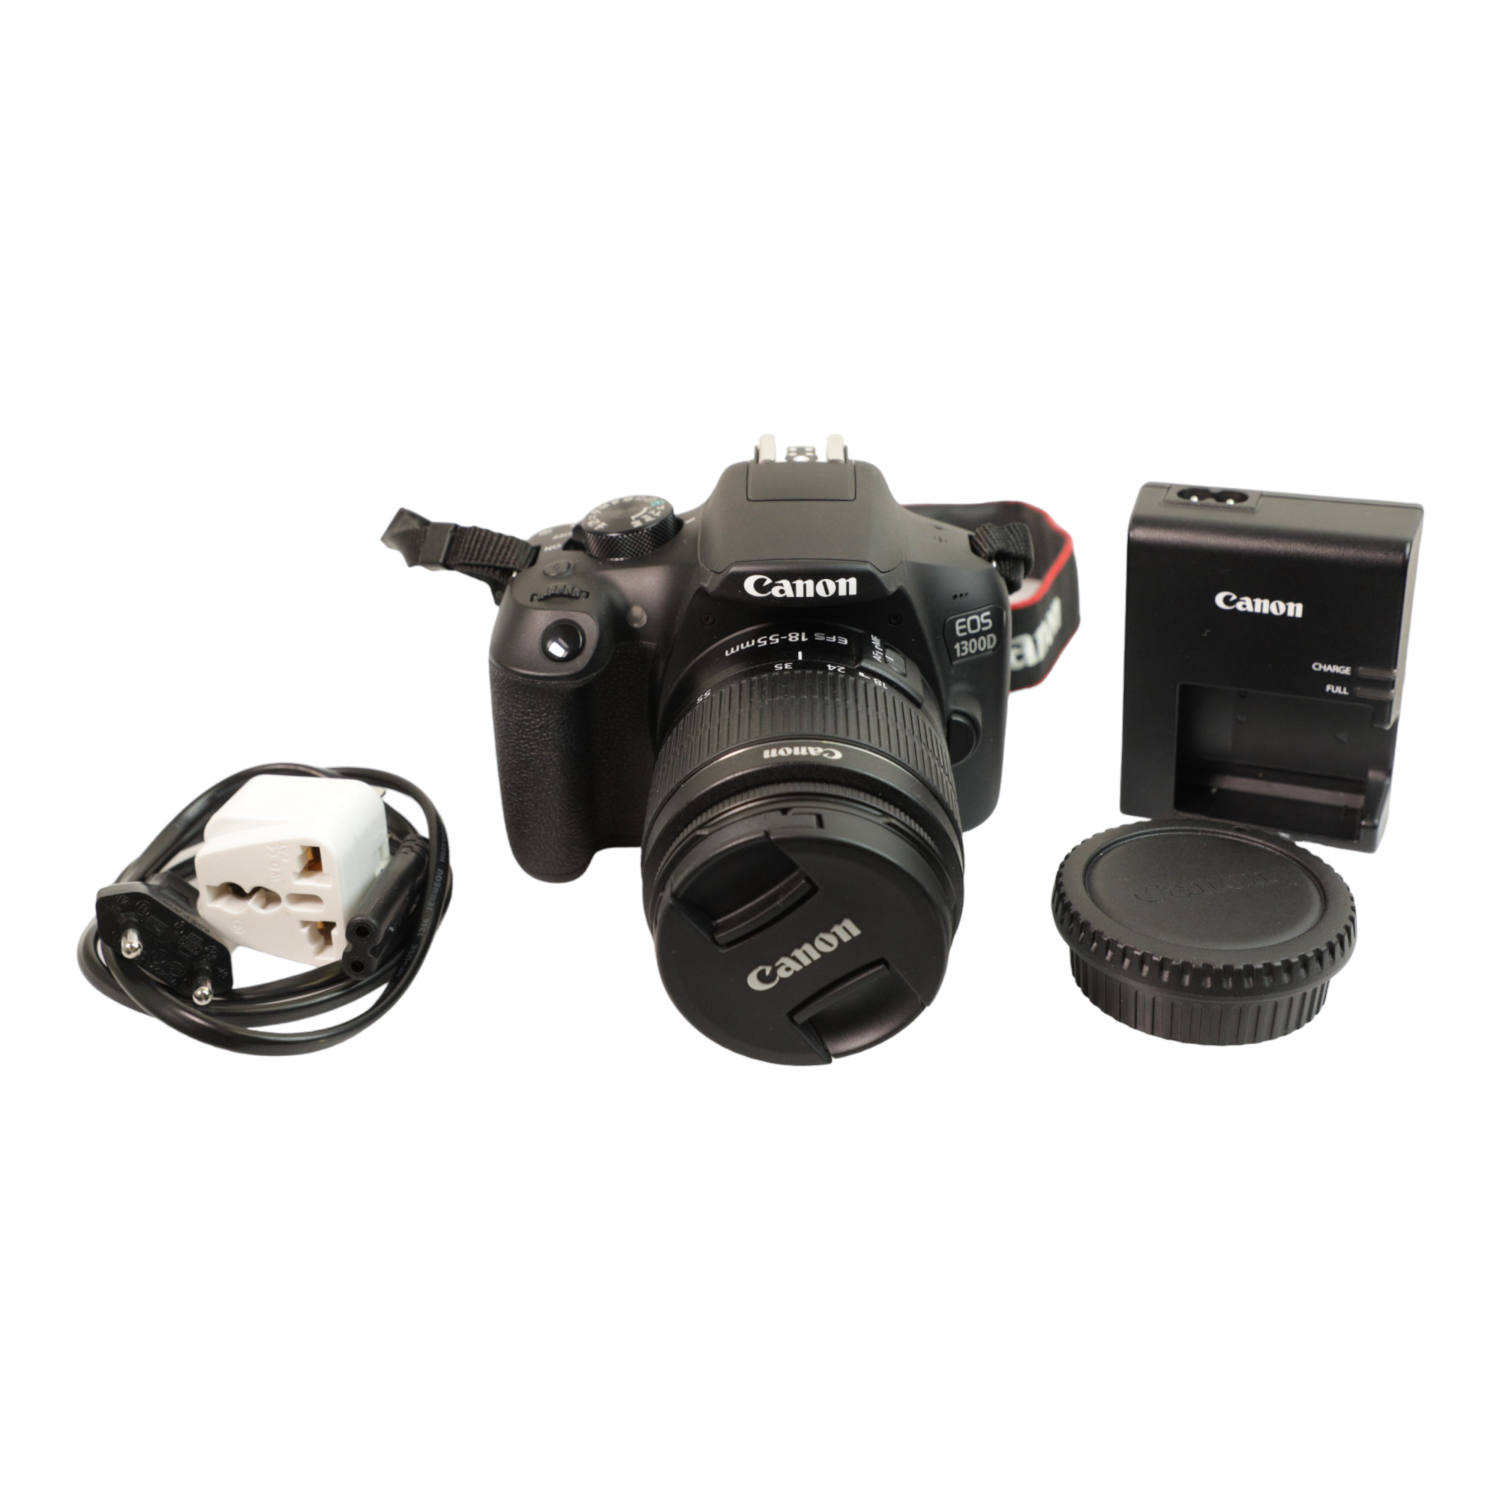 Refurbished(Good) - Canon EOS Rebel T6(1300D) Digital SLR Camera with EF-S 18-55mm f/3.5-5.6 III Lens (Black)